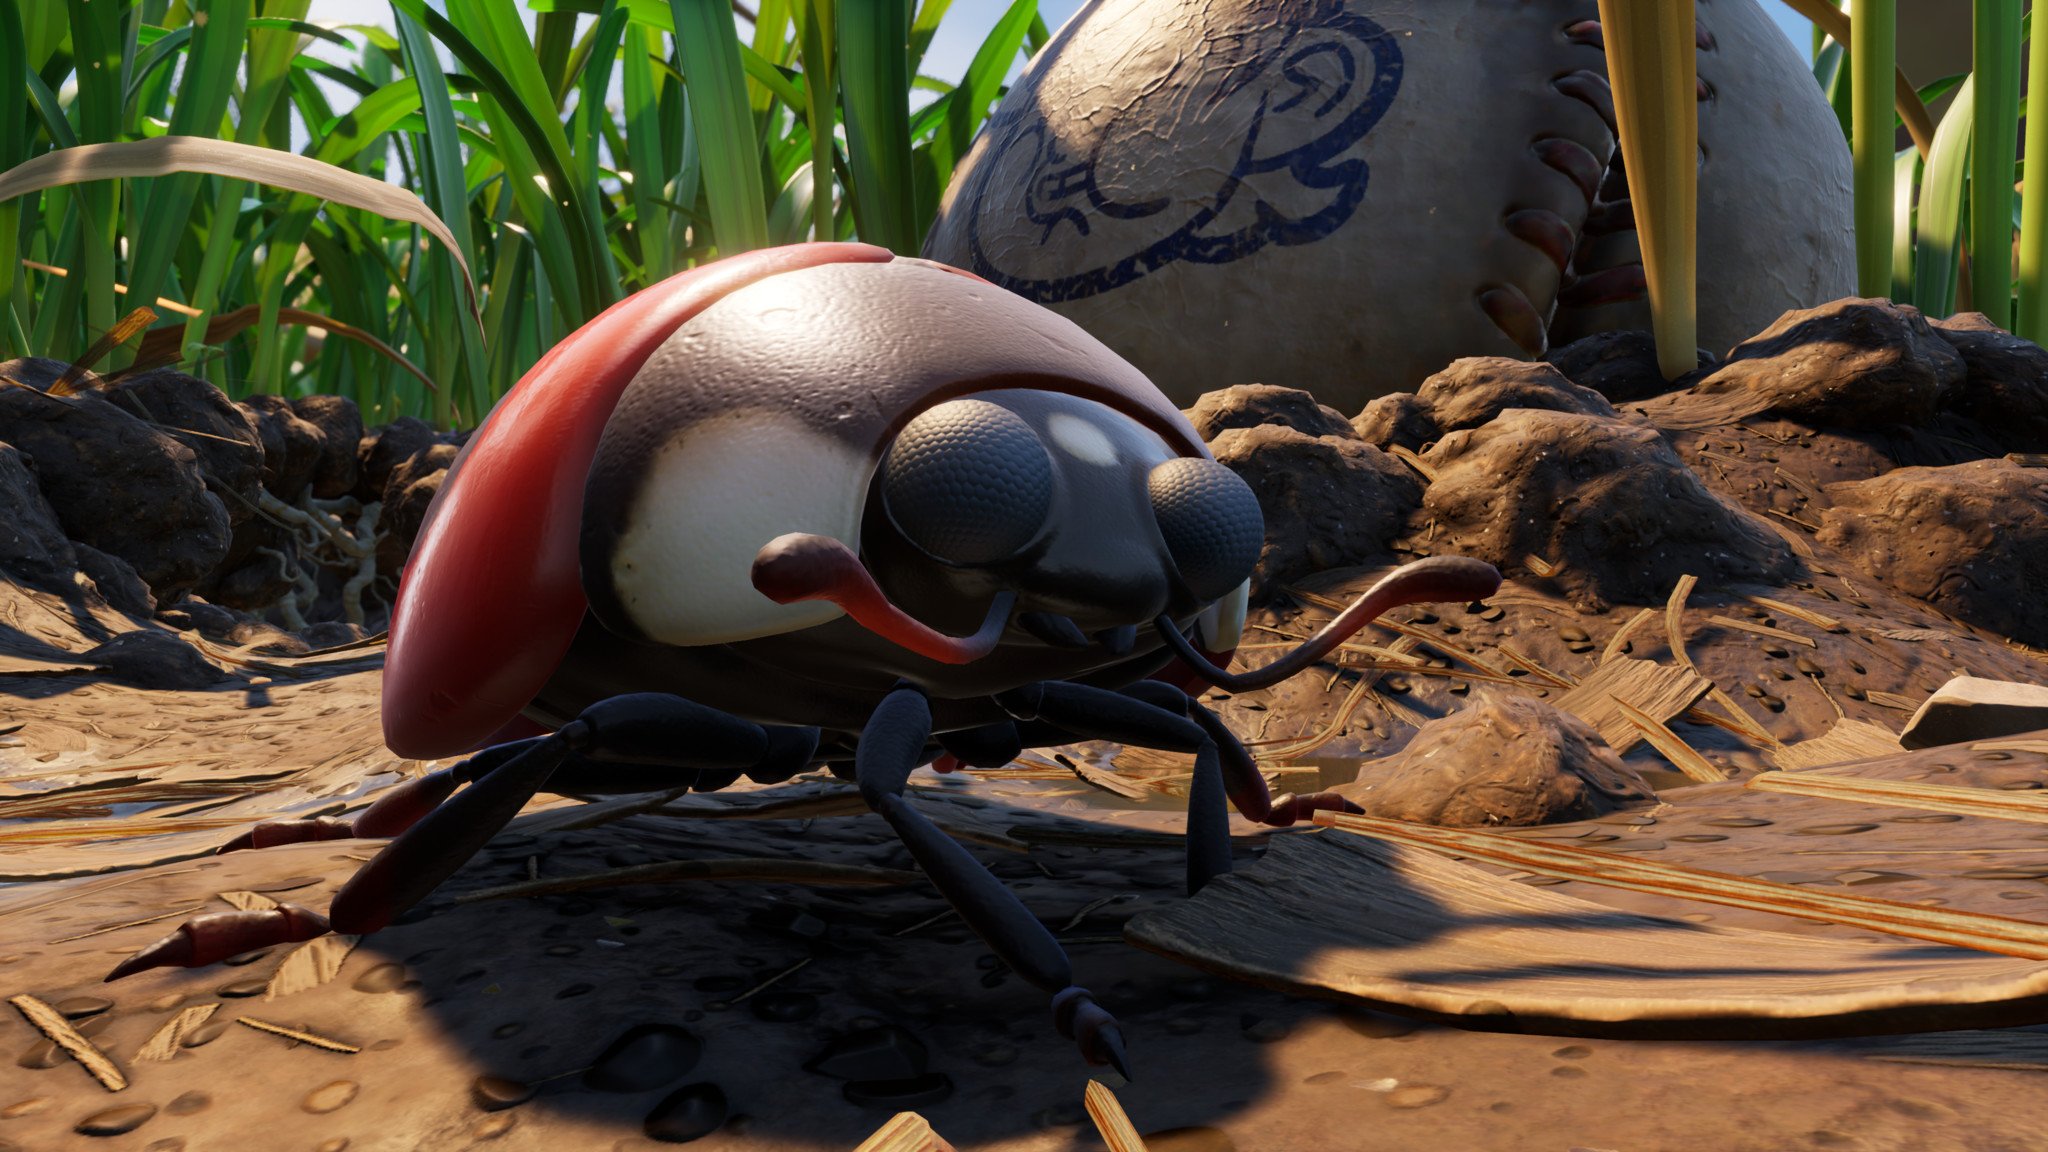 grounded-screenshot-ladybug-01.jpg